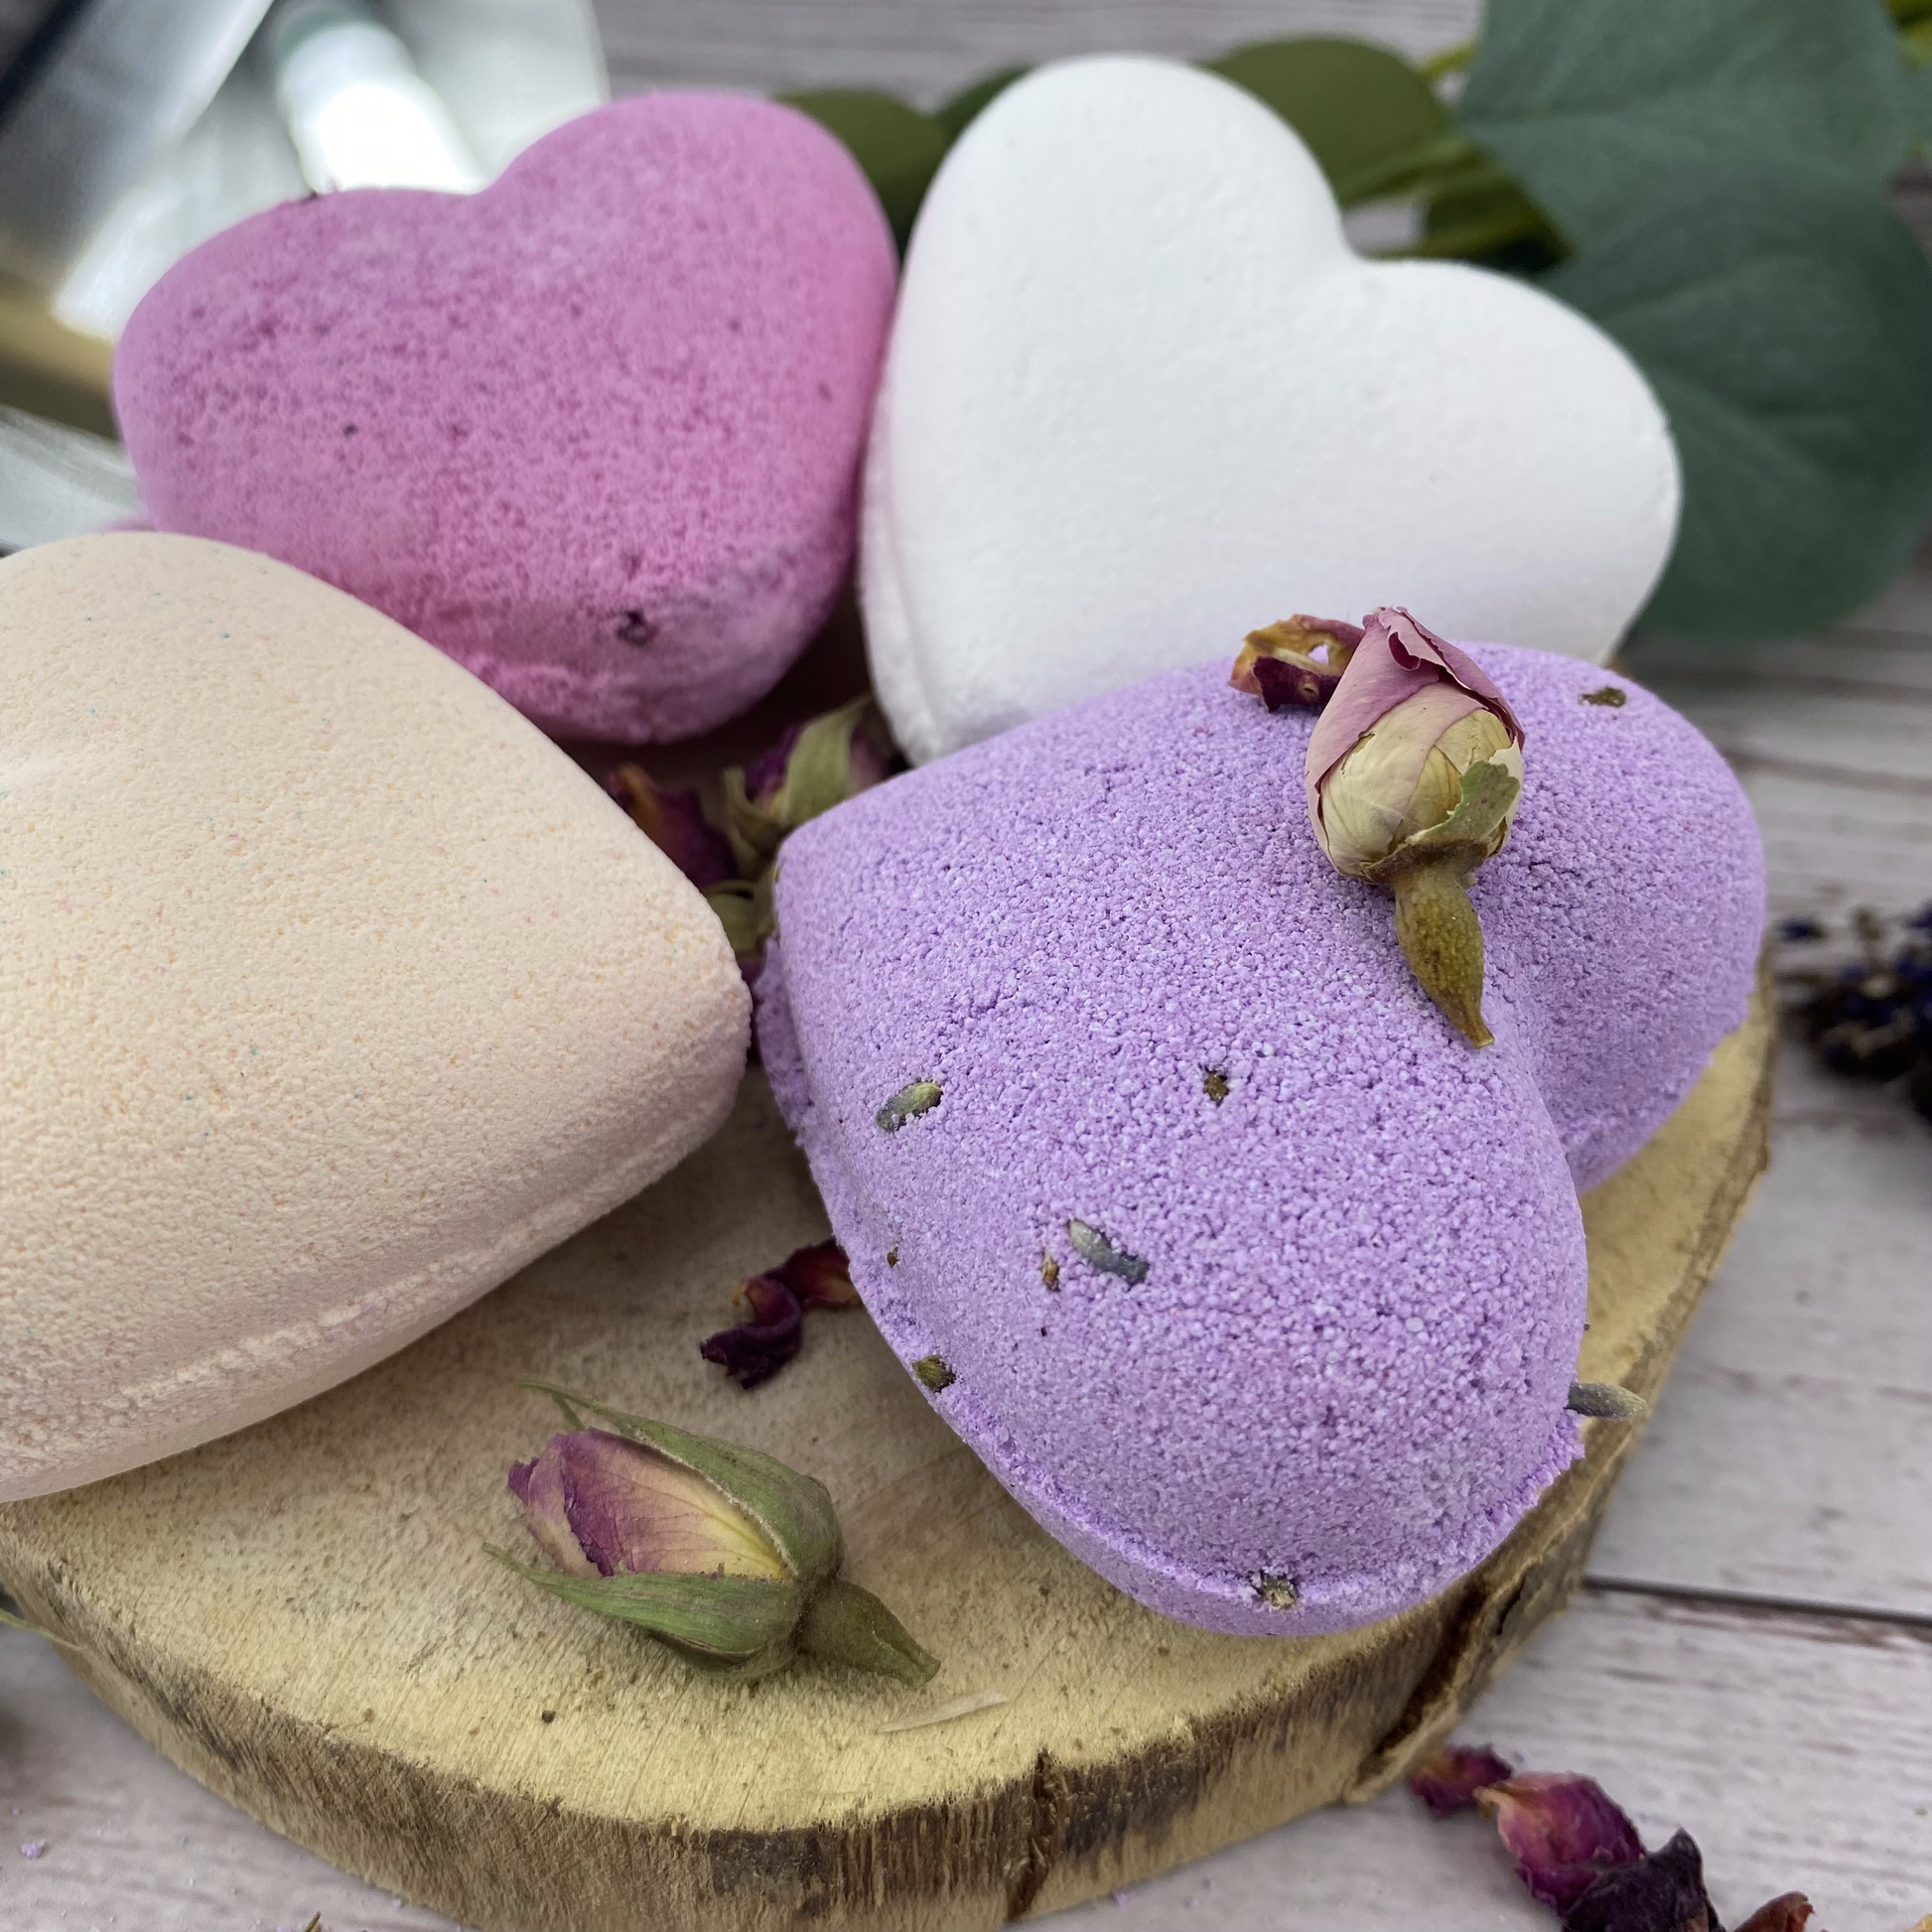 coconut, lavender, passion fruit & rose heart shaped bath bombs